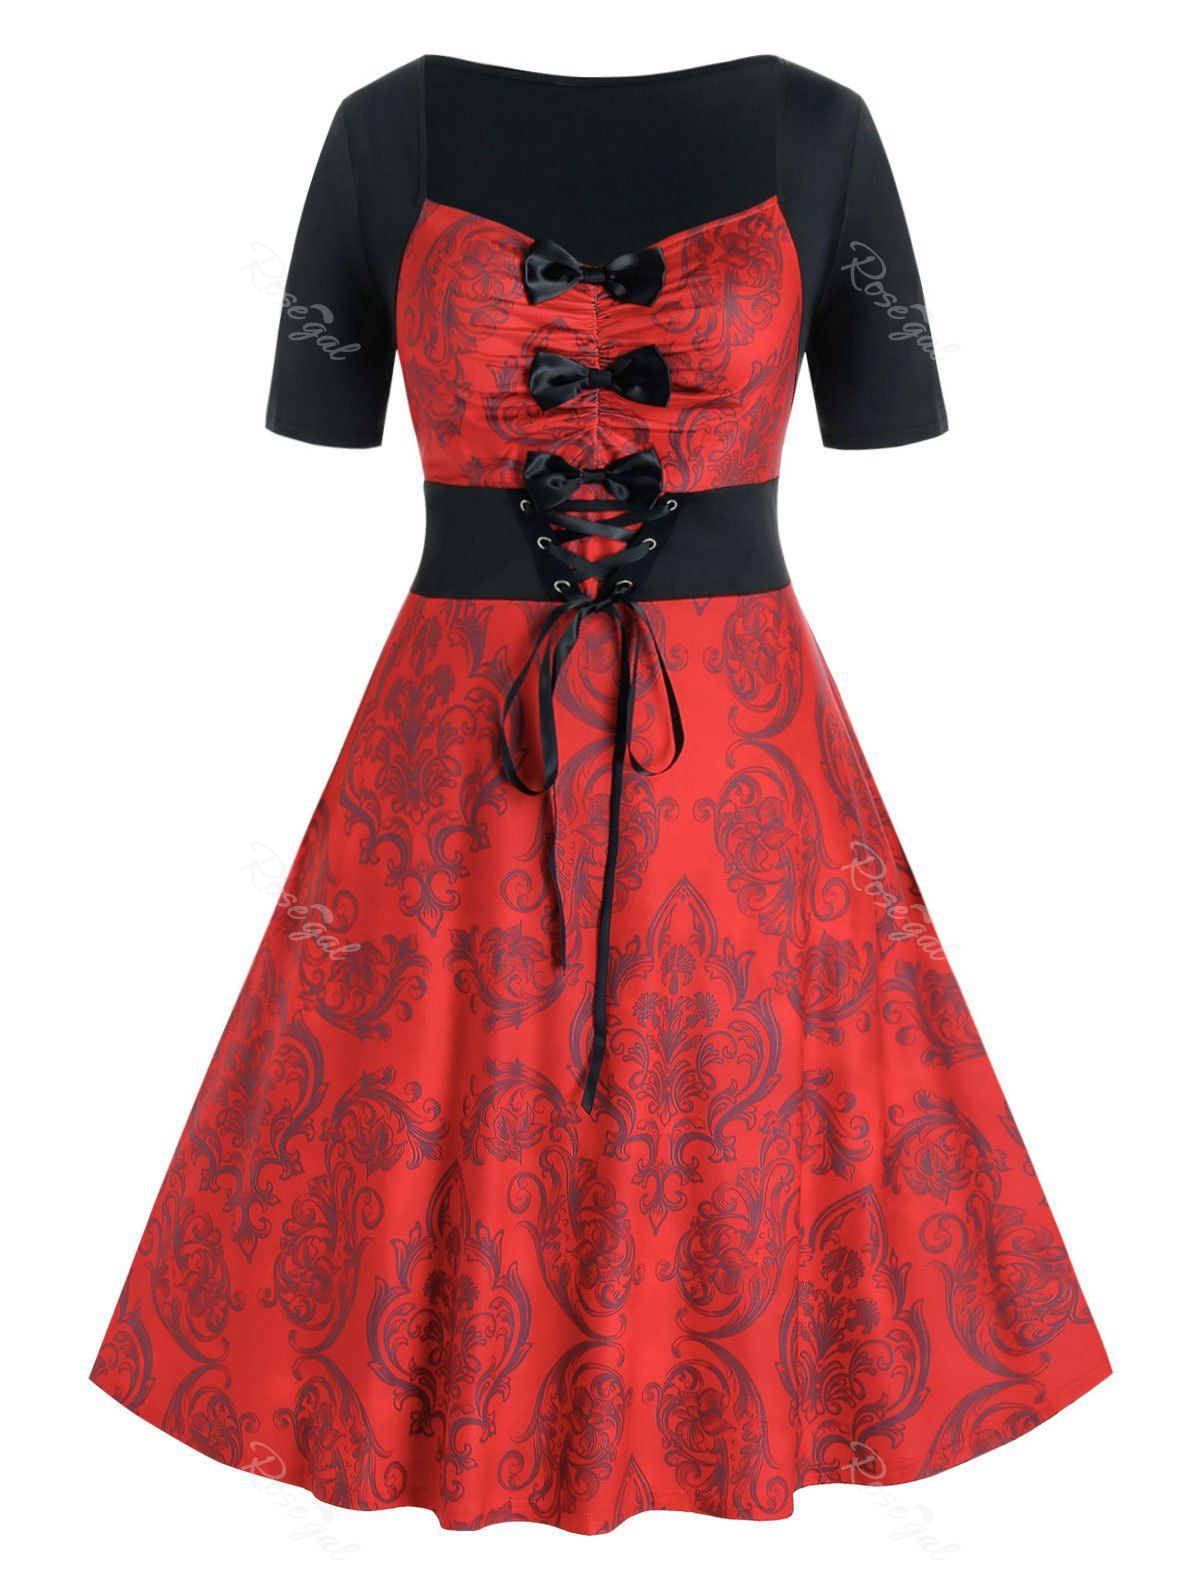 Trendy Plus Size Damask Print Bowknot Lace-up Vintage Dress  